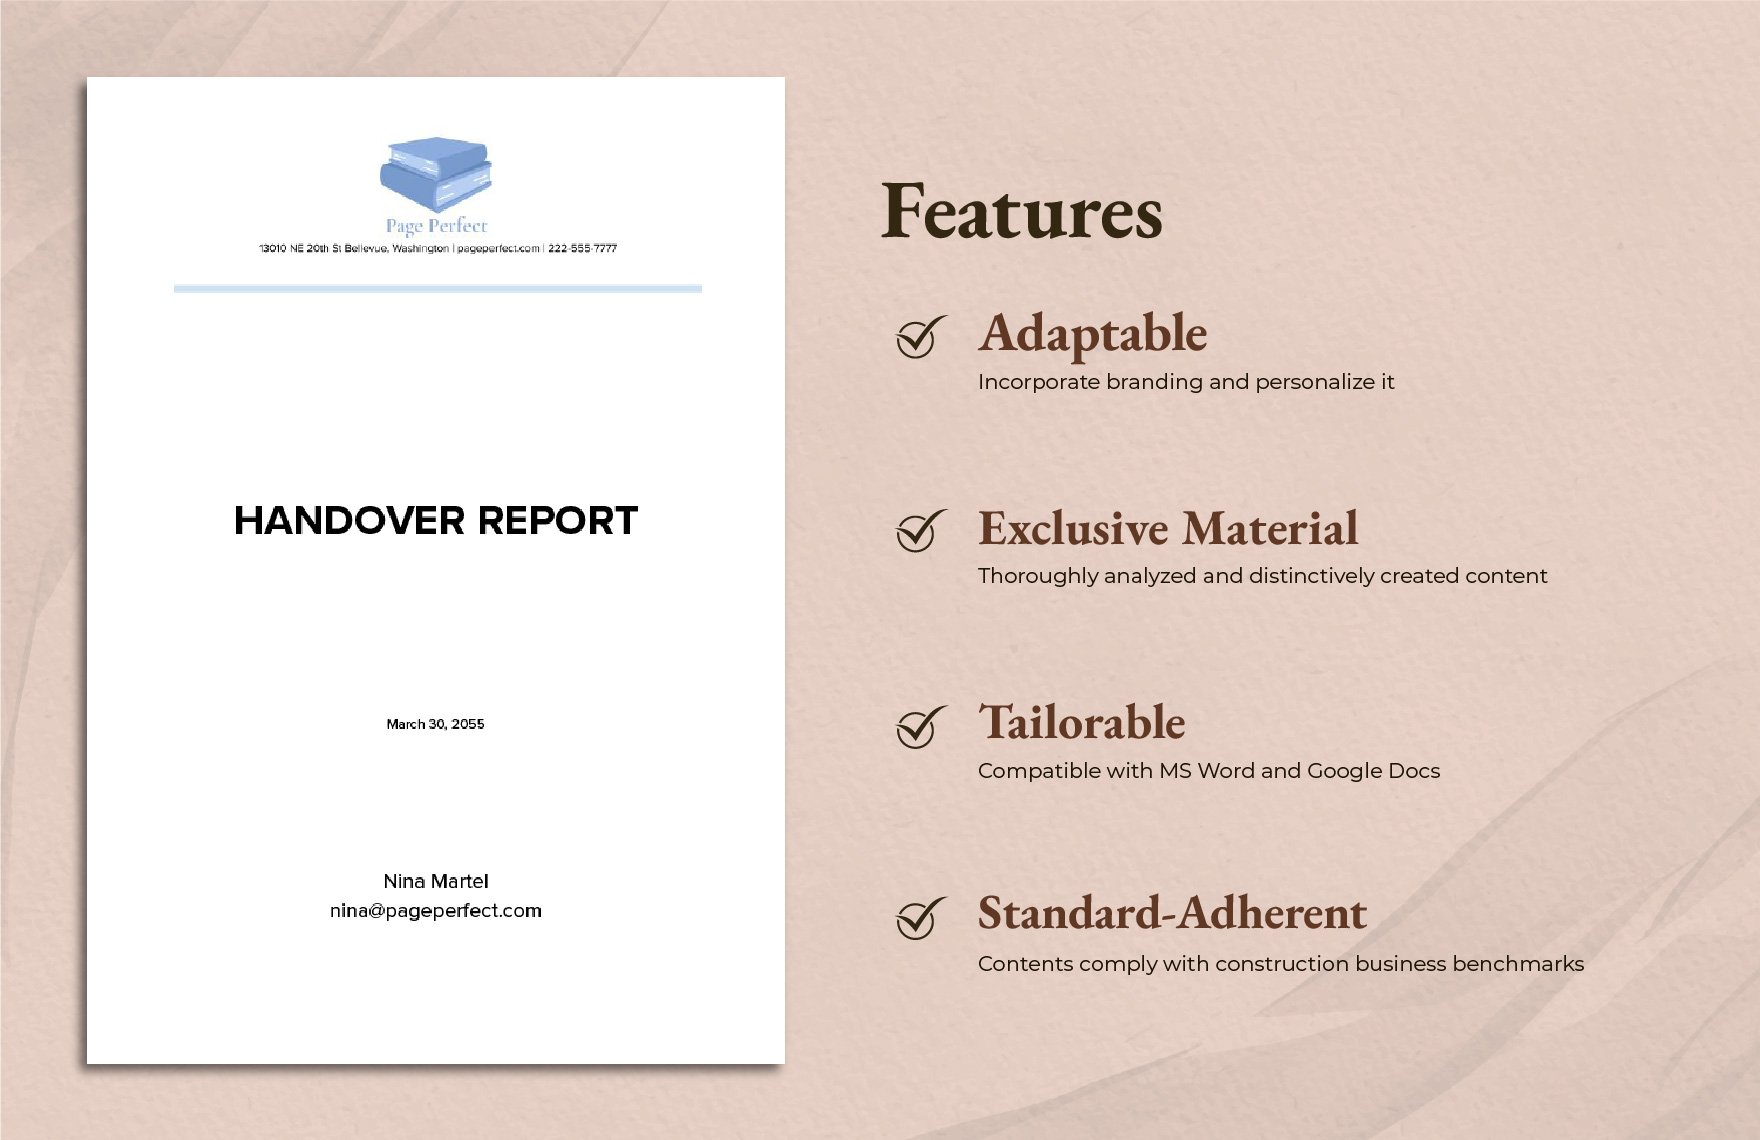 Handover Report PDF Format